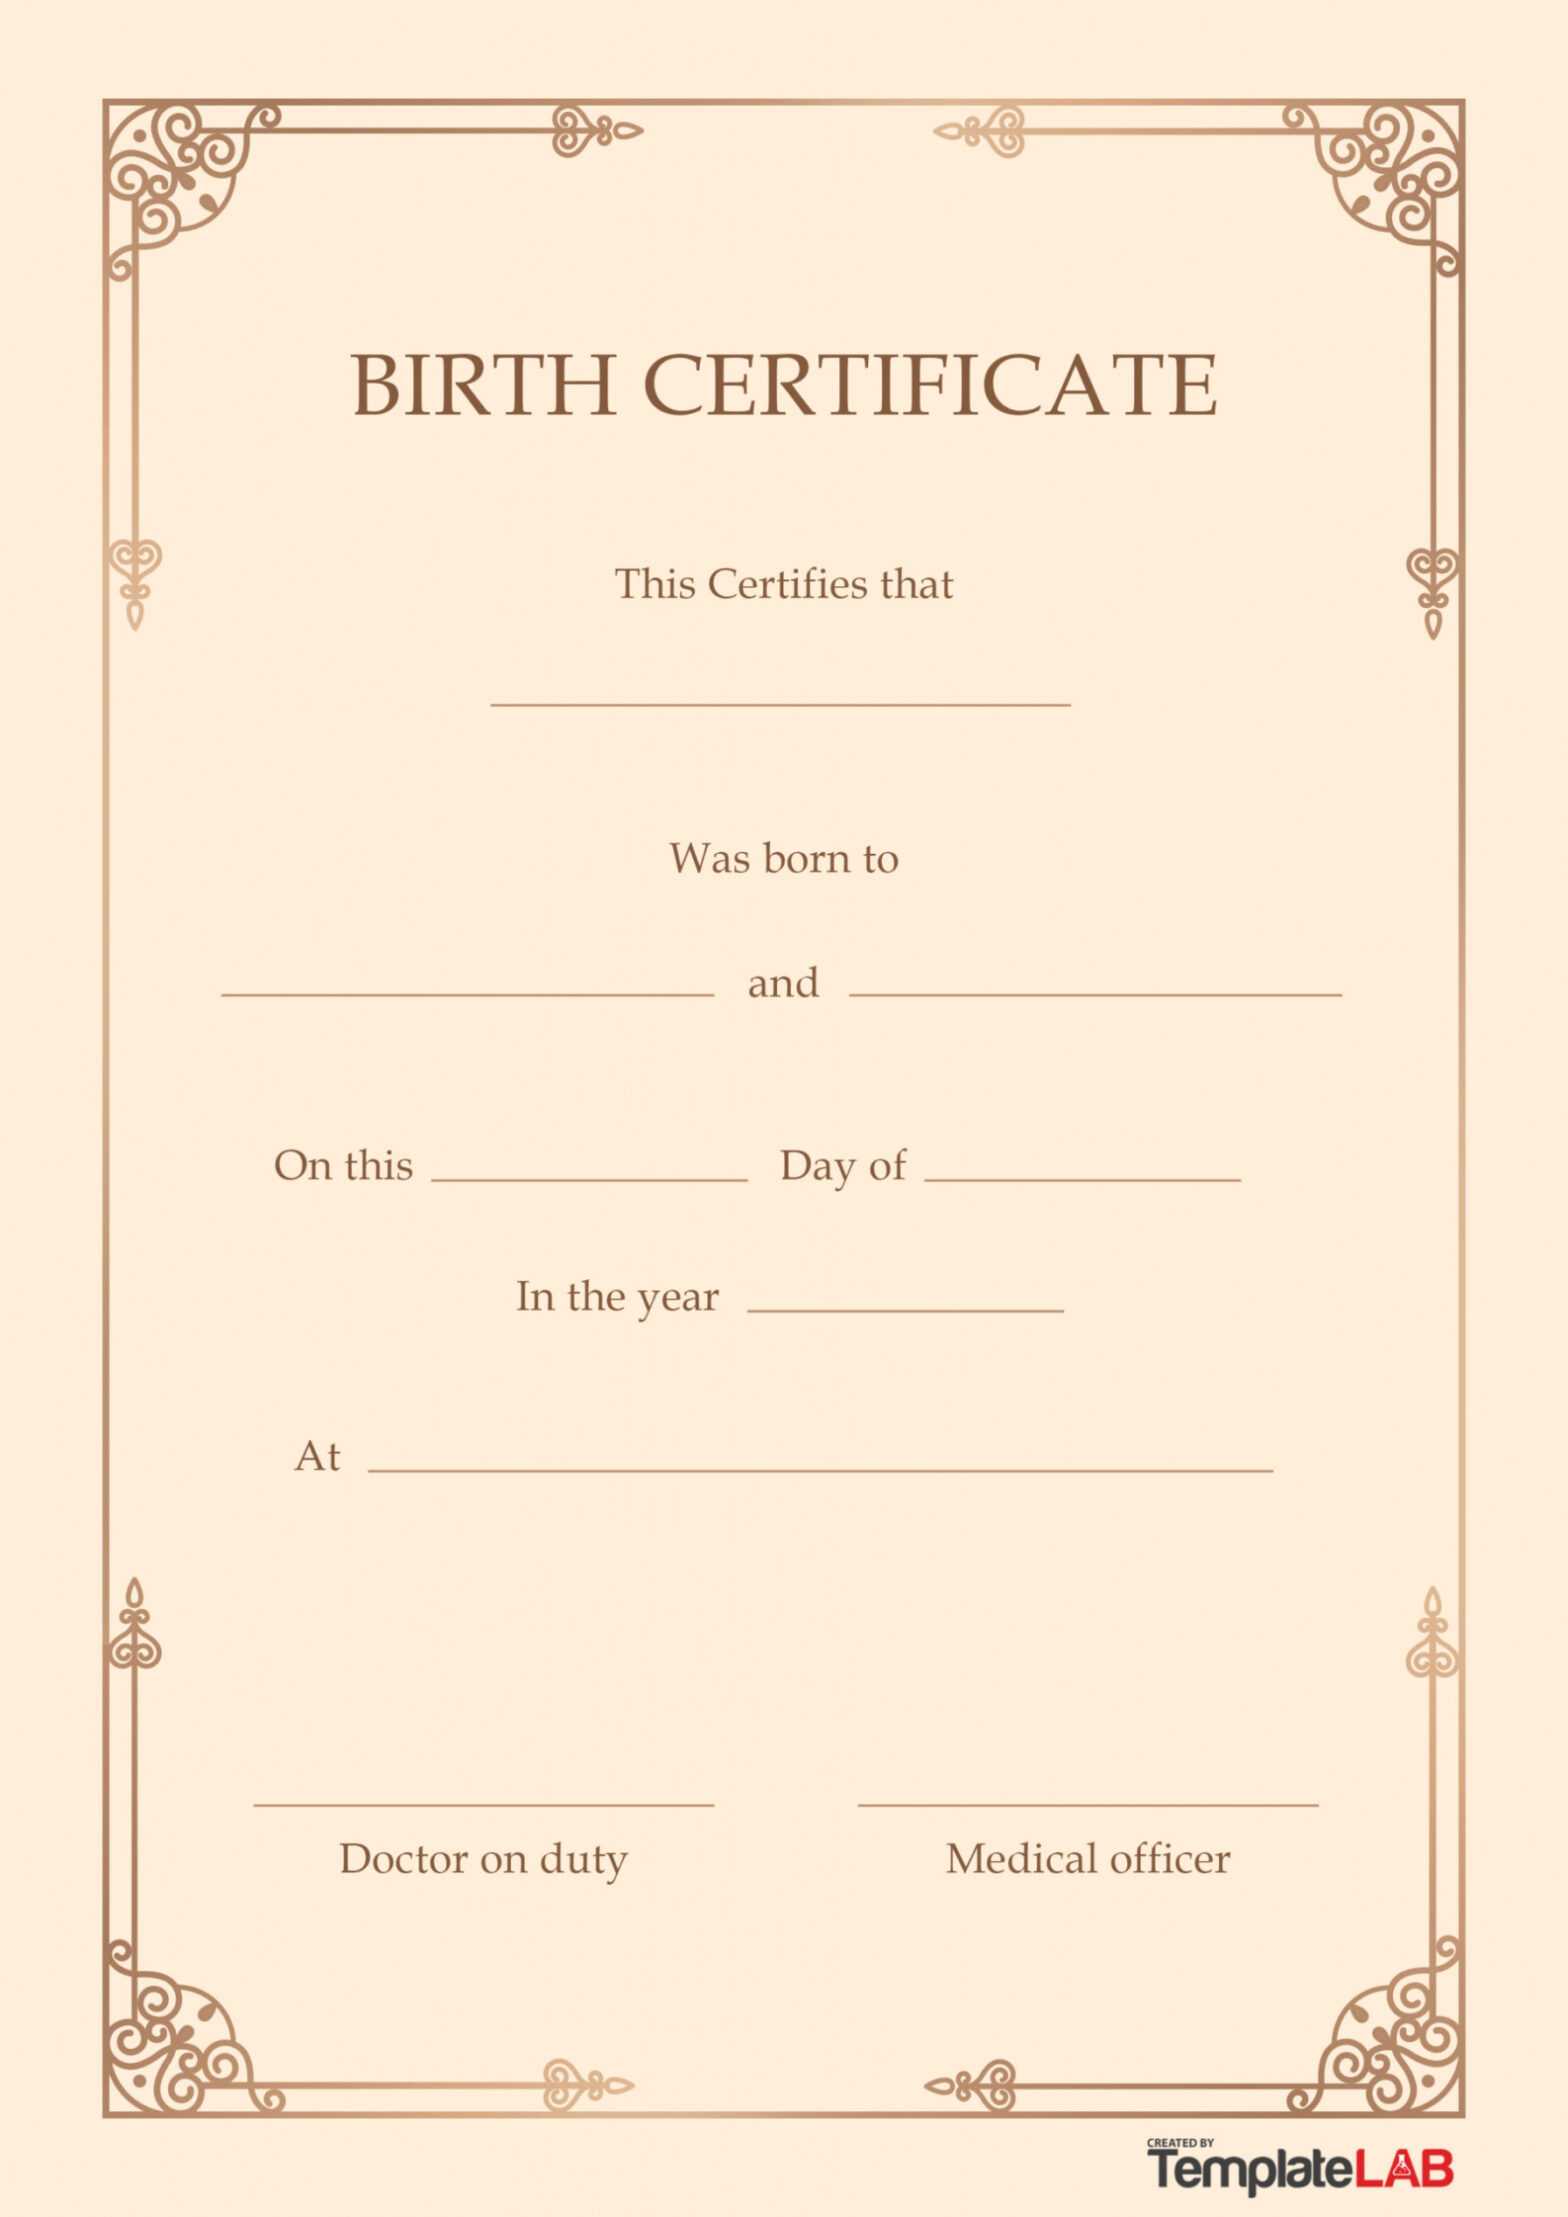 15 Birth Certificate Templates (Word &amp; Pdf) ᐅ Templatelab with regard to Birth Certificate Fake Template